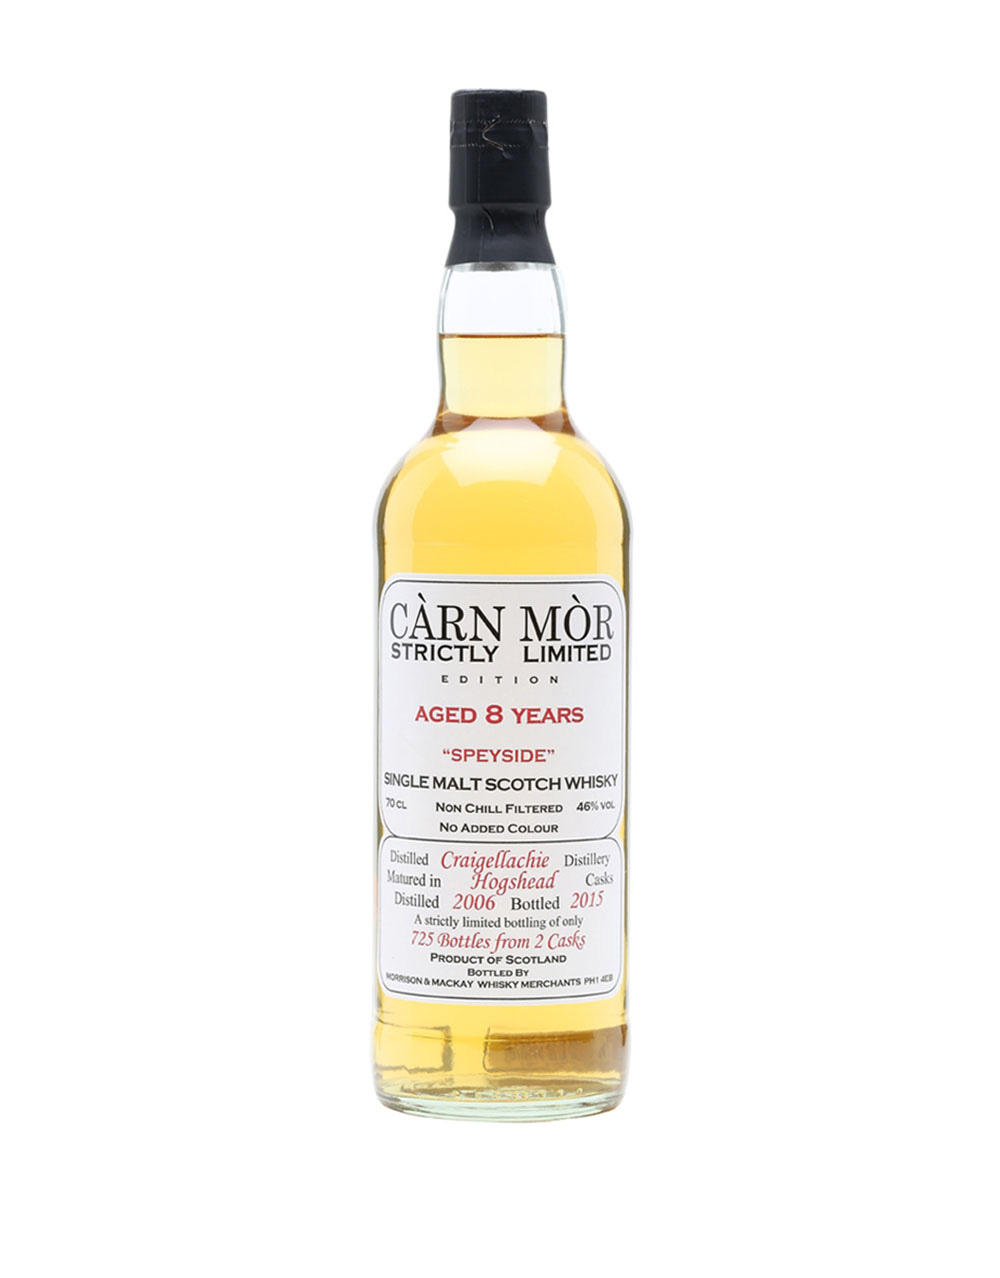 Carn Mor Strictly Limited Speyside 8 Year Old Speyside Single Malt Scotch Whisky